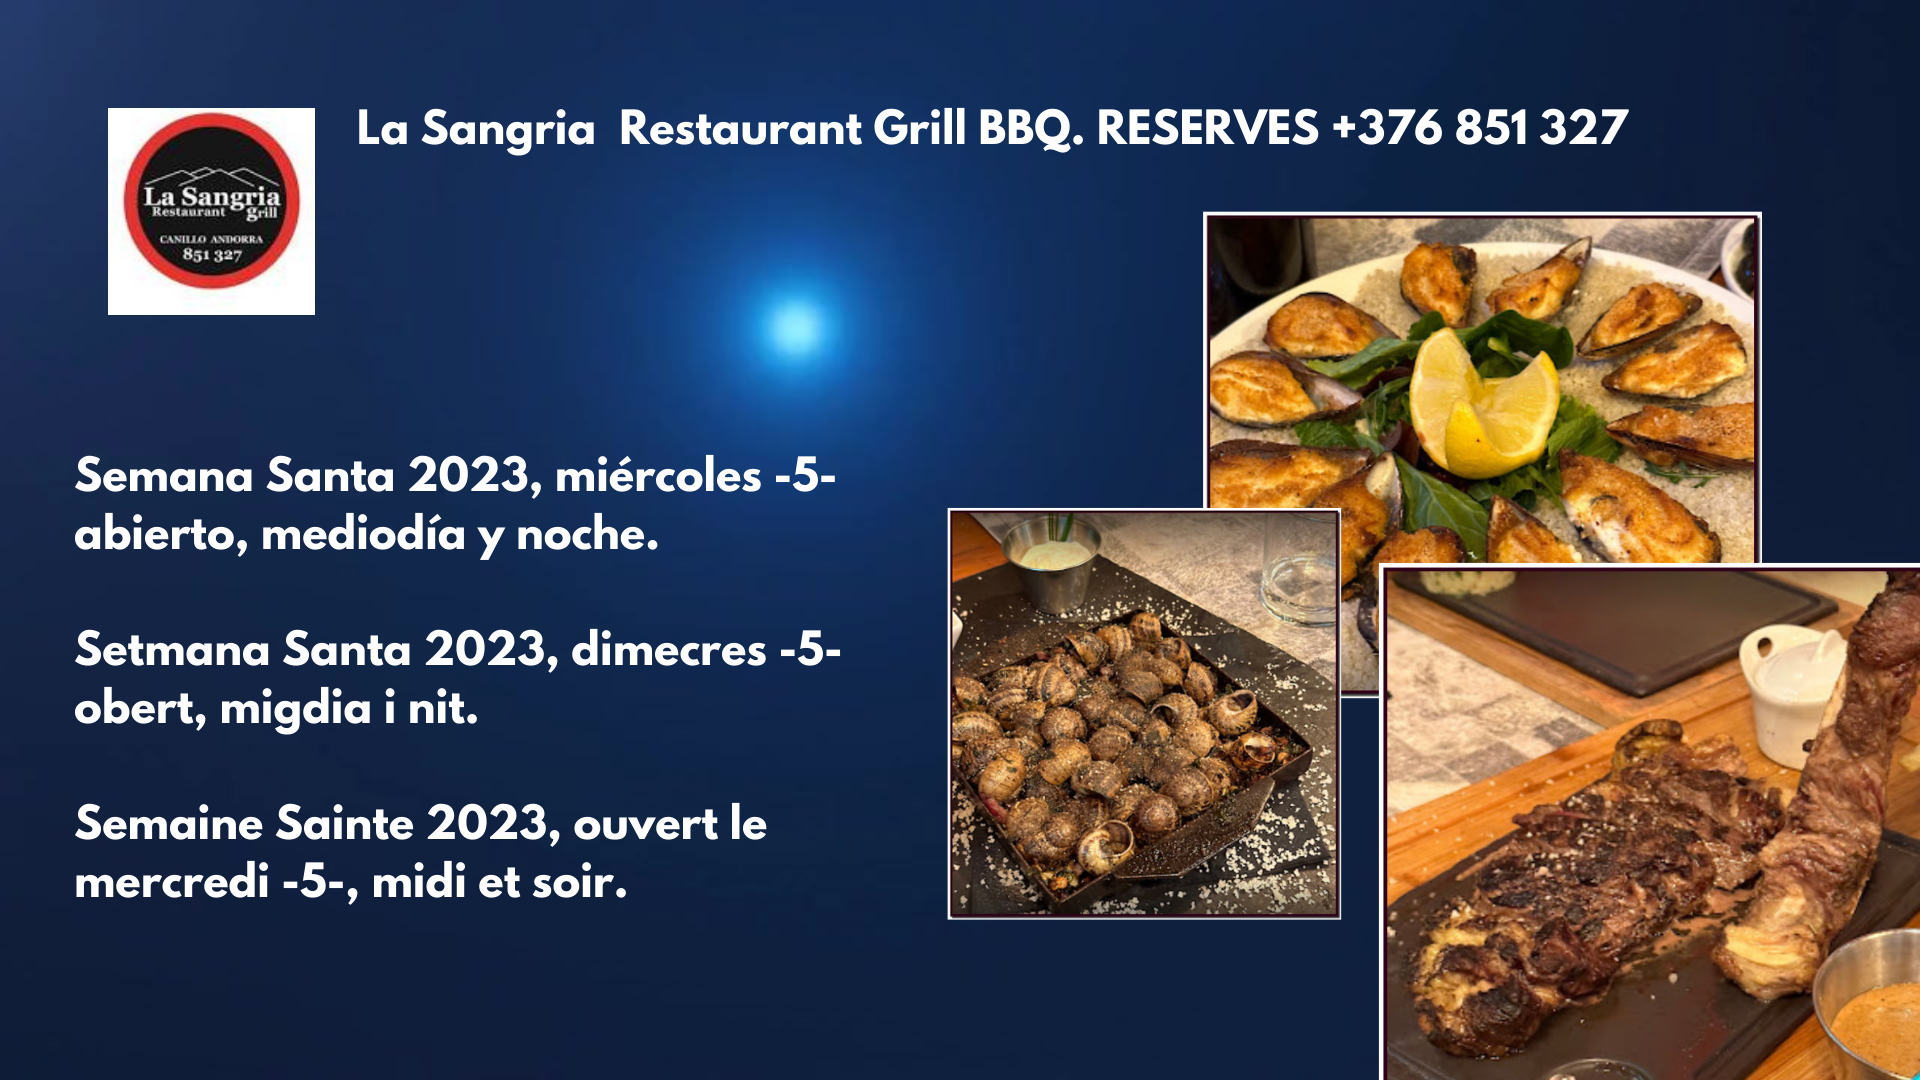 La Sangria Restaurant Grill BBQ. RESERVES +376 851 327 Setmana Santa 2023, dimecres -5-obert, migdia i nit. Semaine Sainte 2023, ouvert le mercredi -5-, midi et soir.